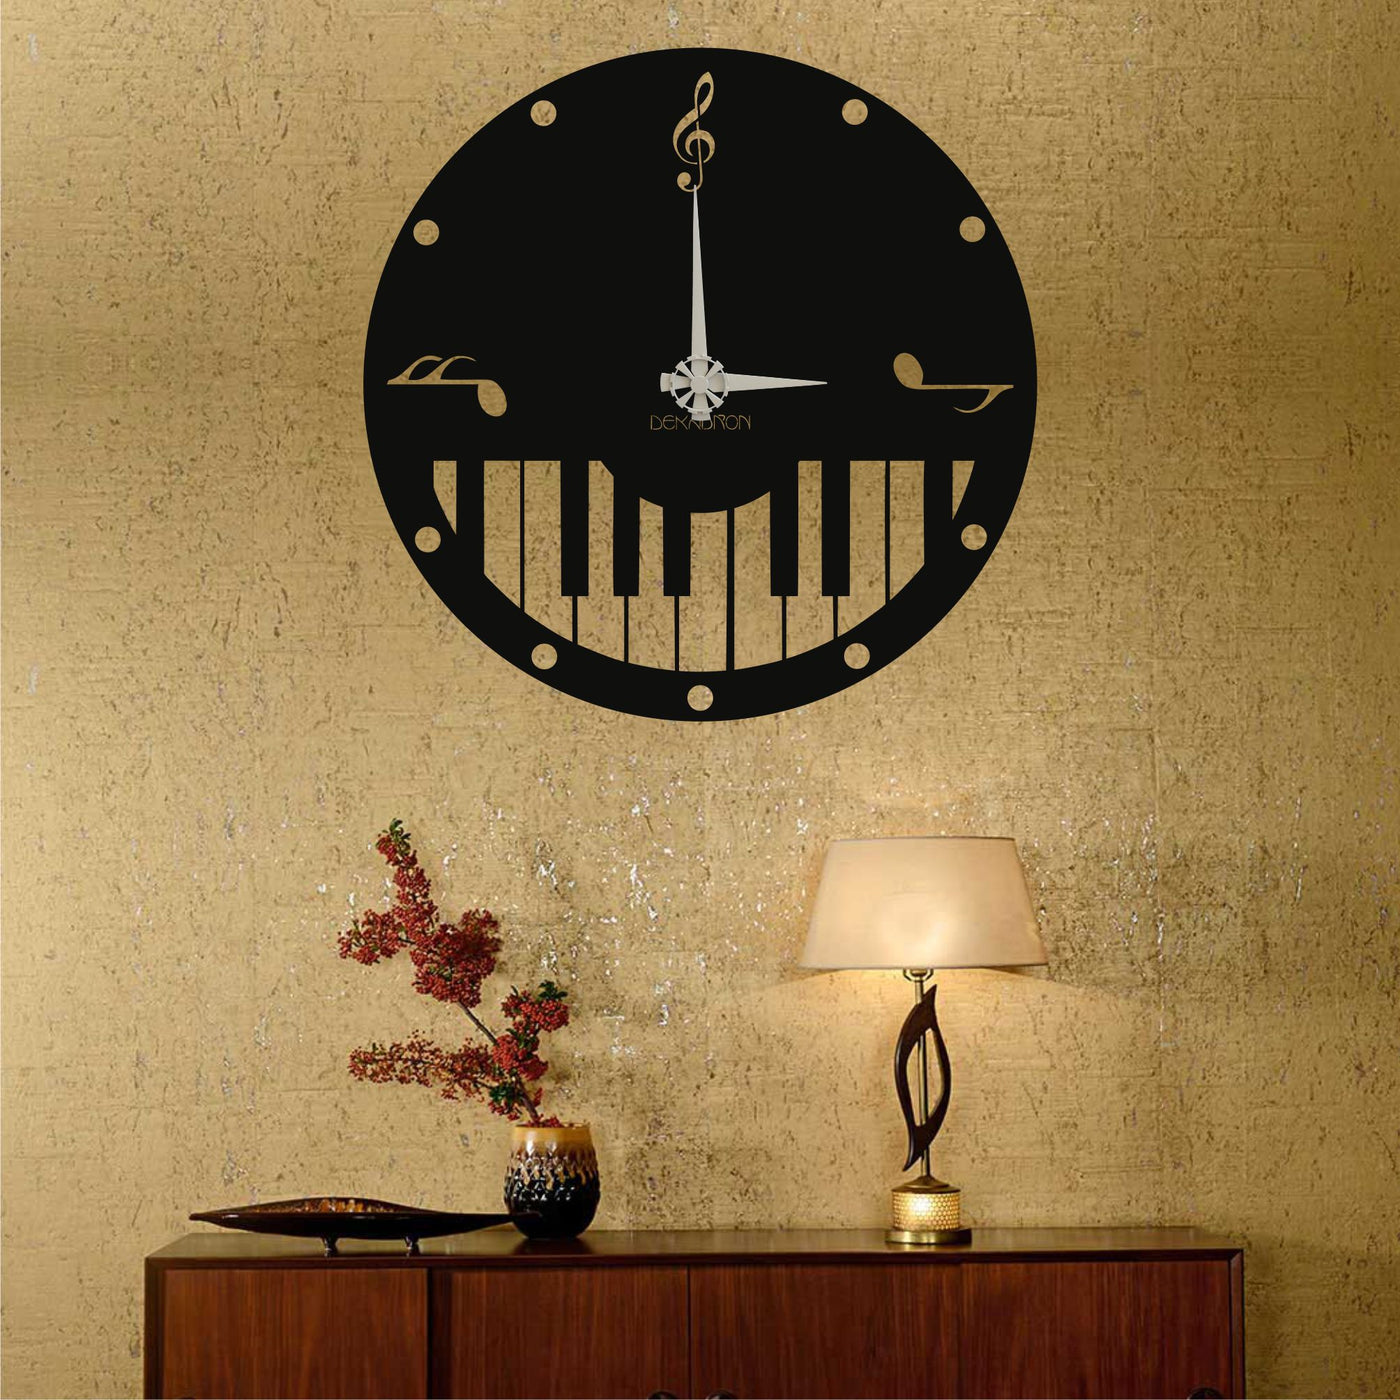 Piano Clock